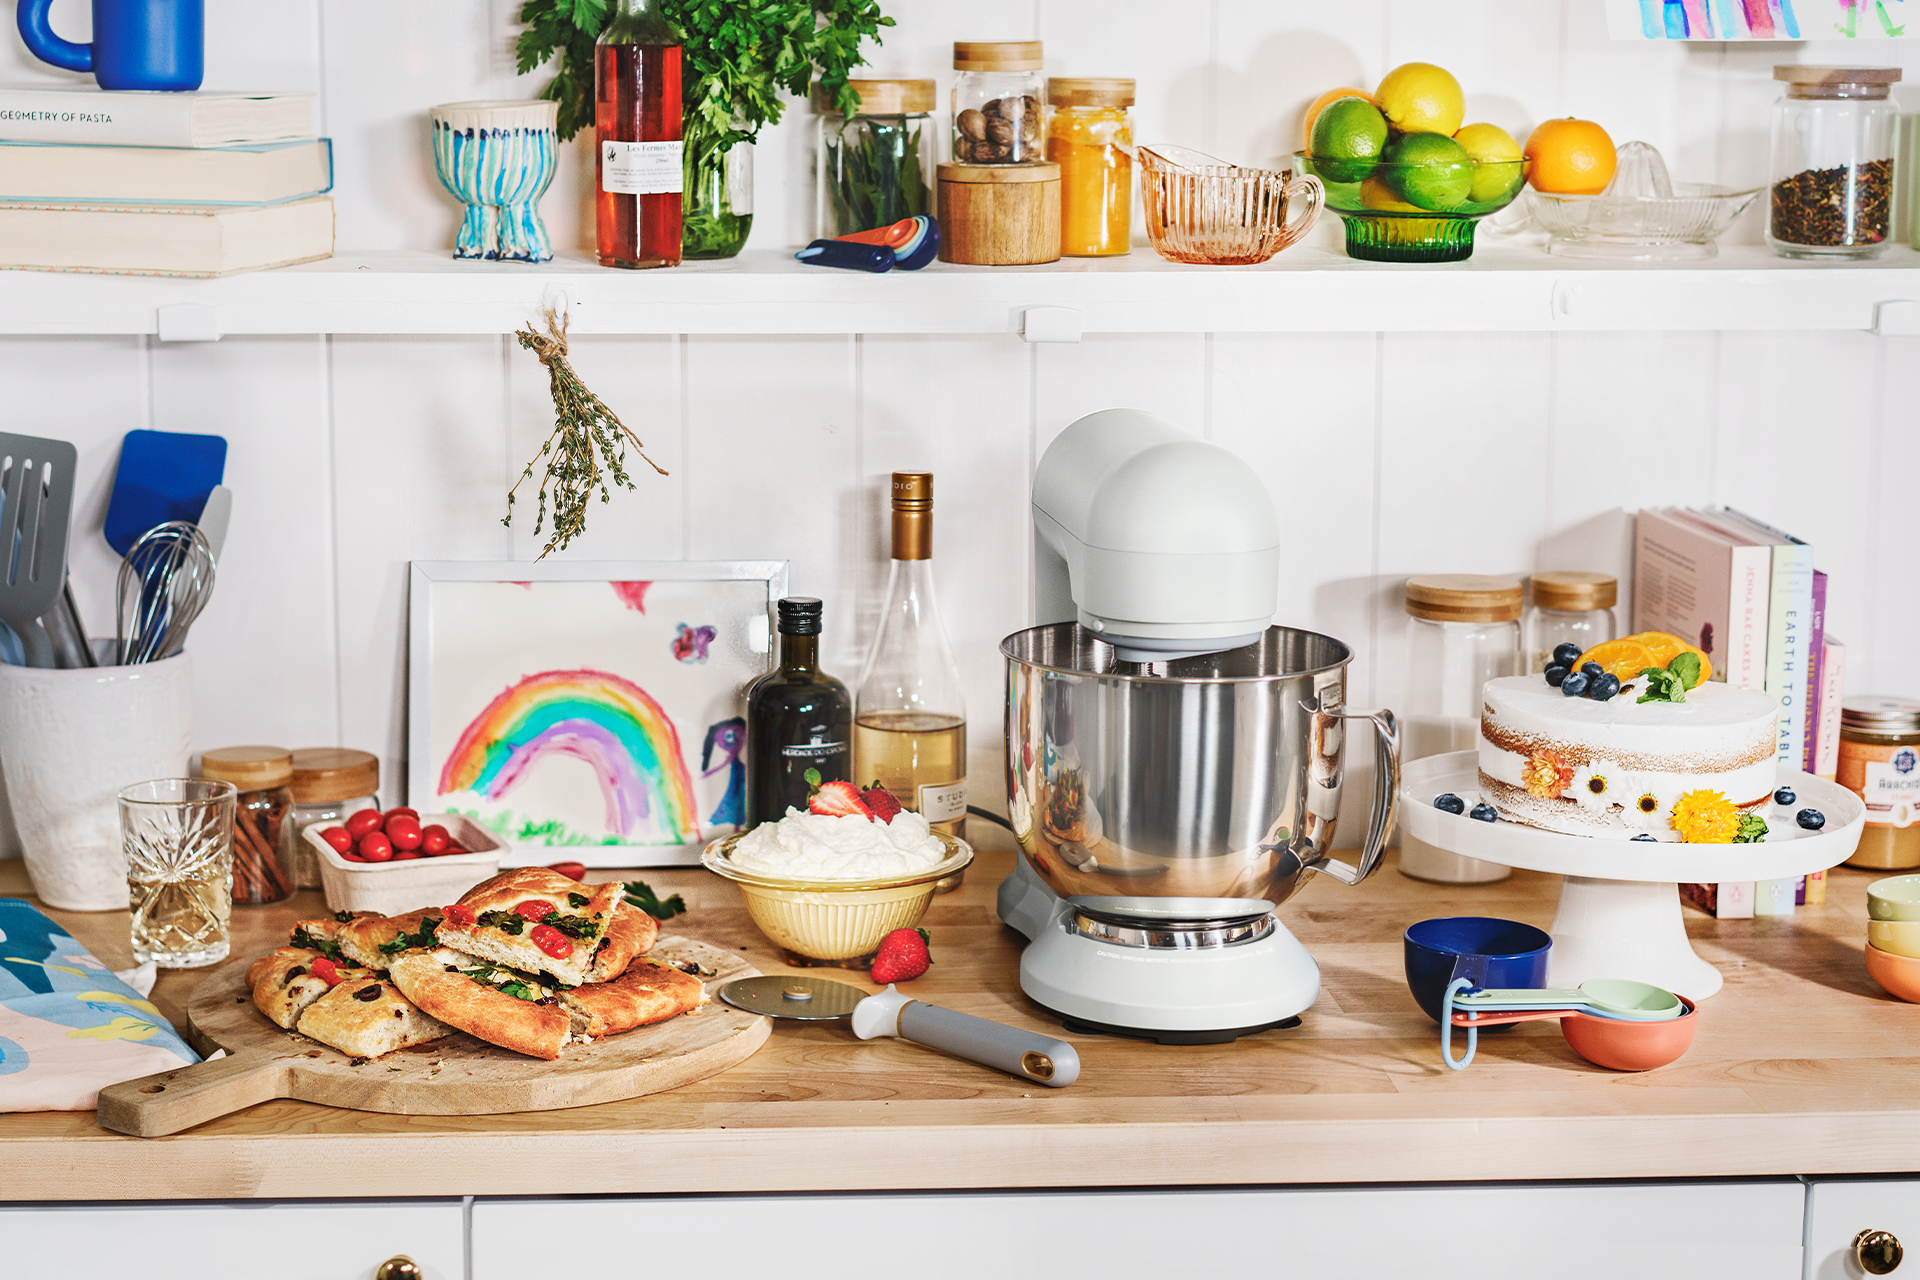 Drew Barrymore's New Kitchenware Line Is Stunning